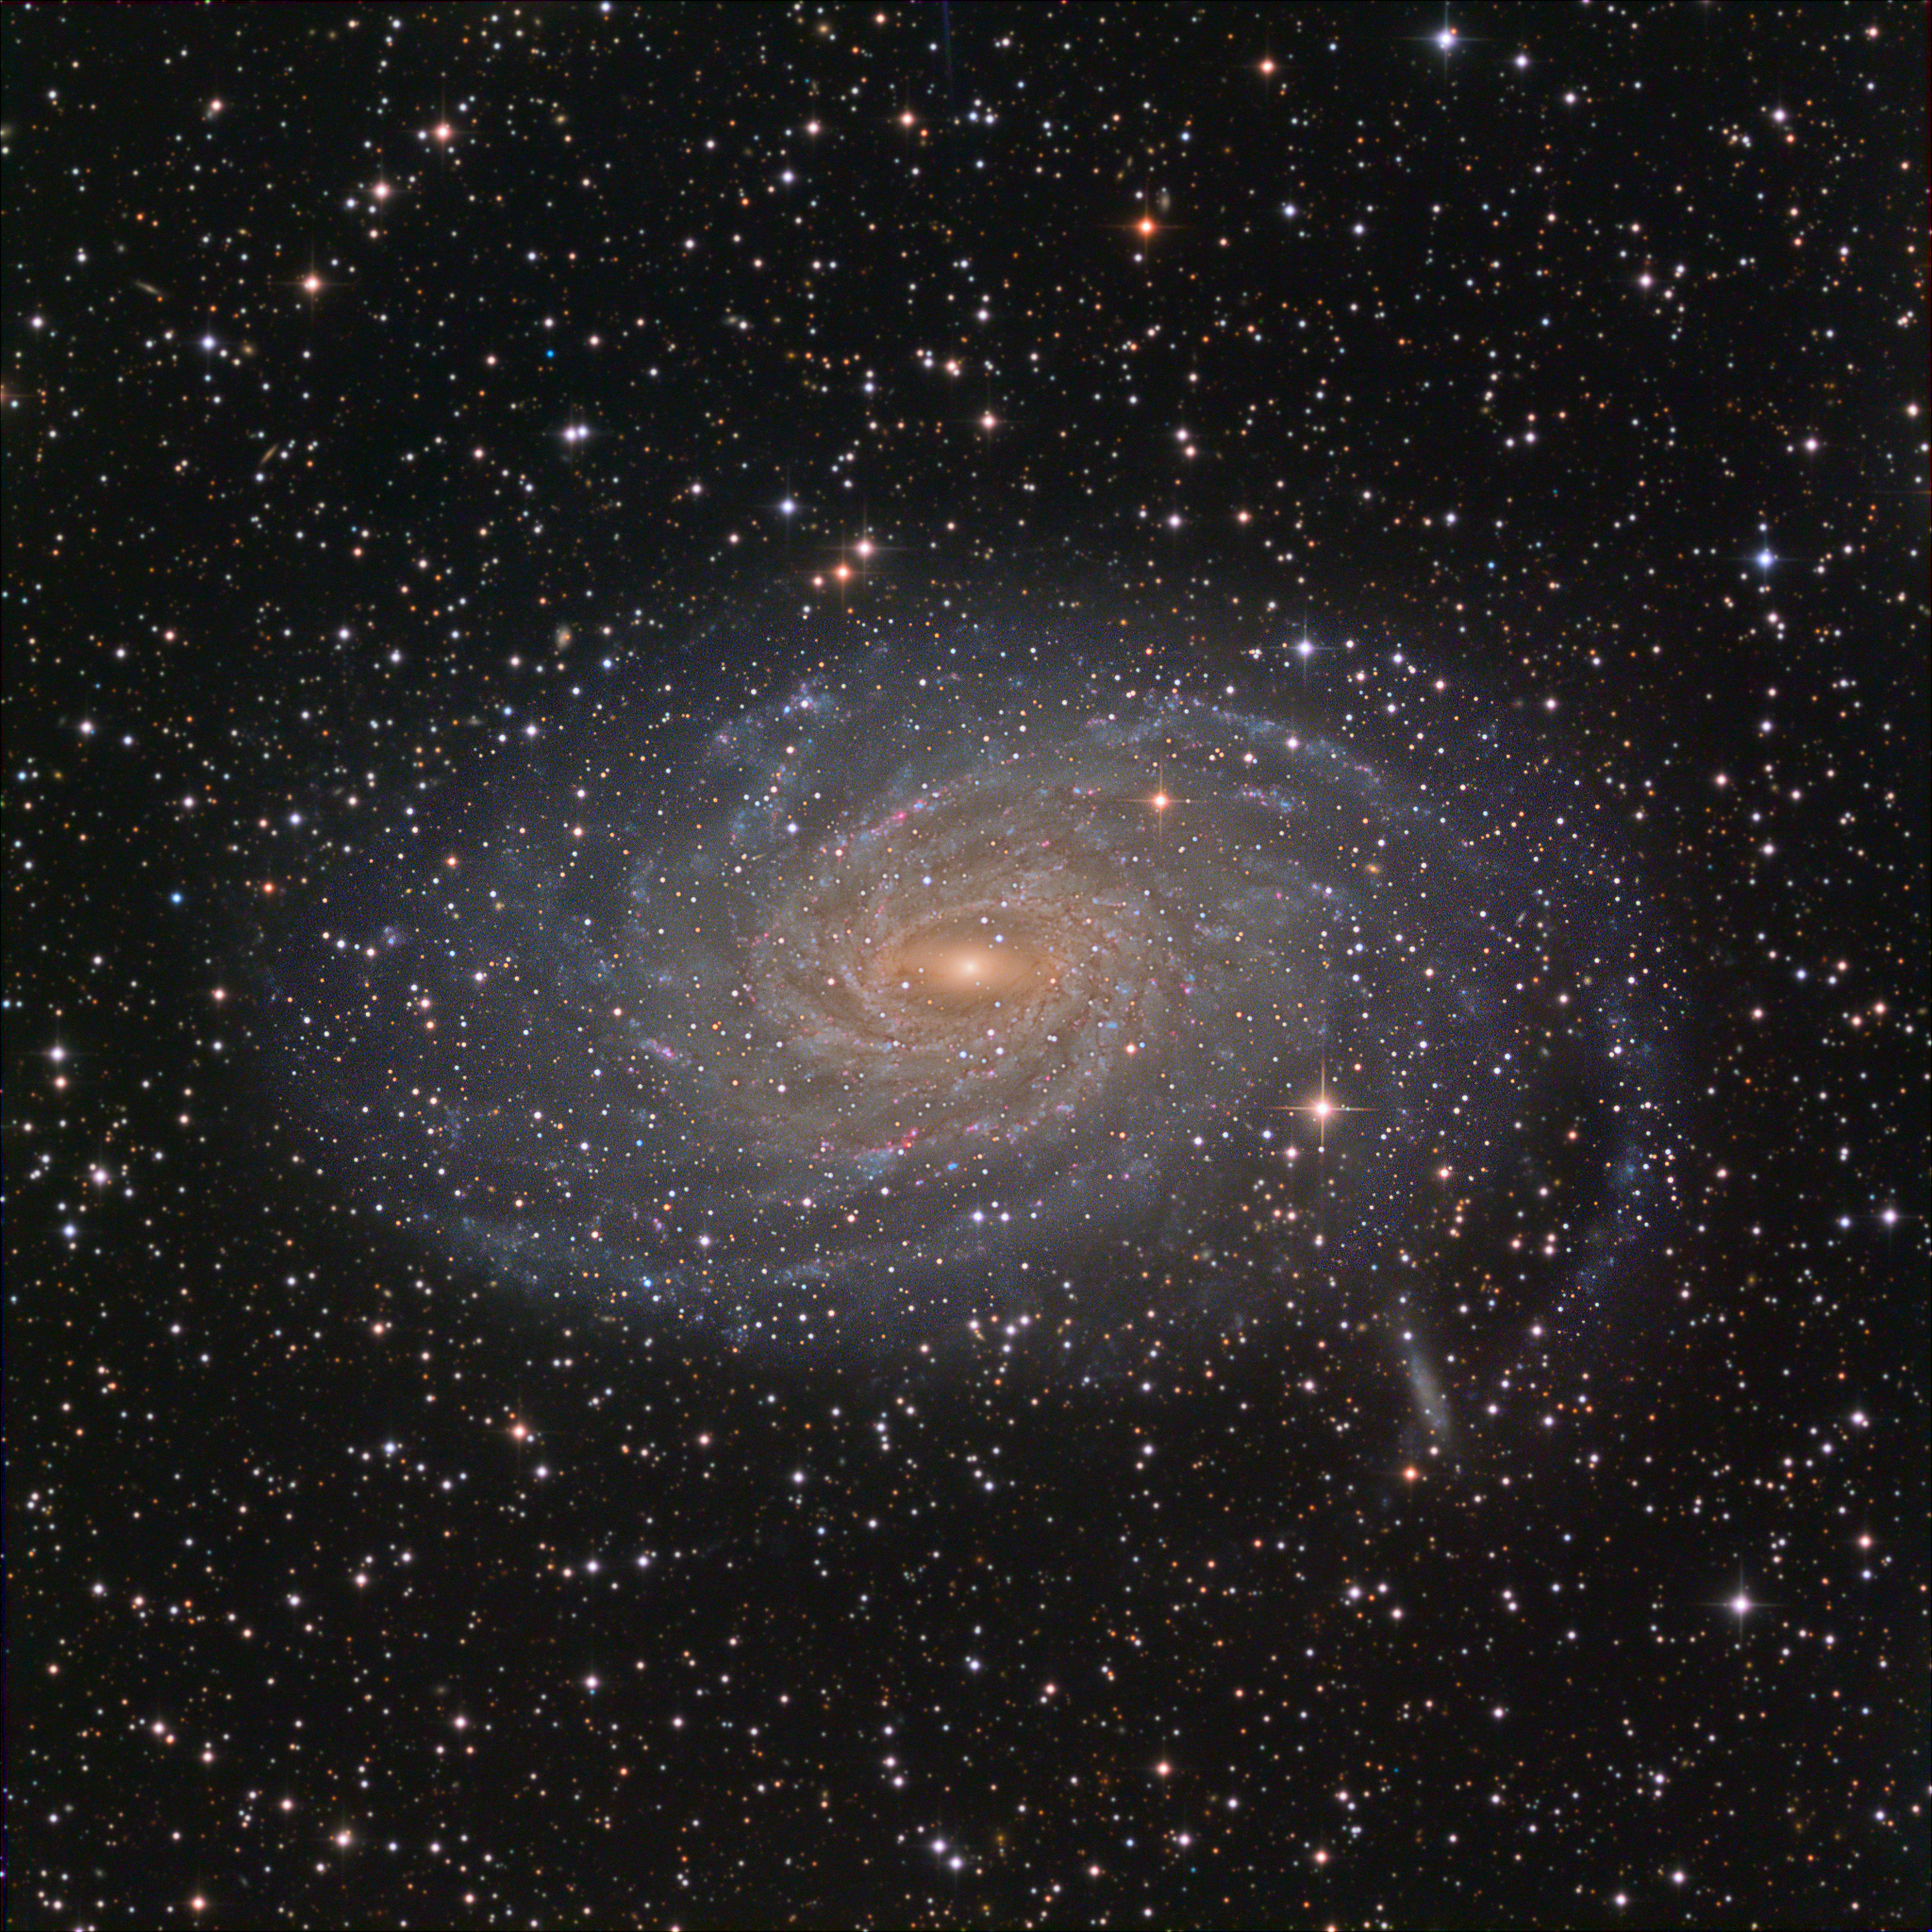 旋涡星系NGC 6744